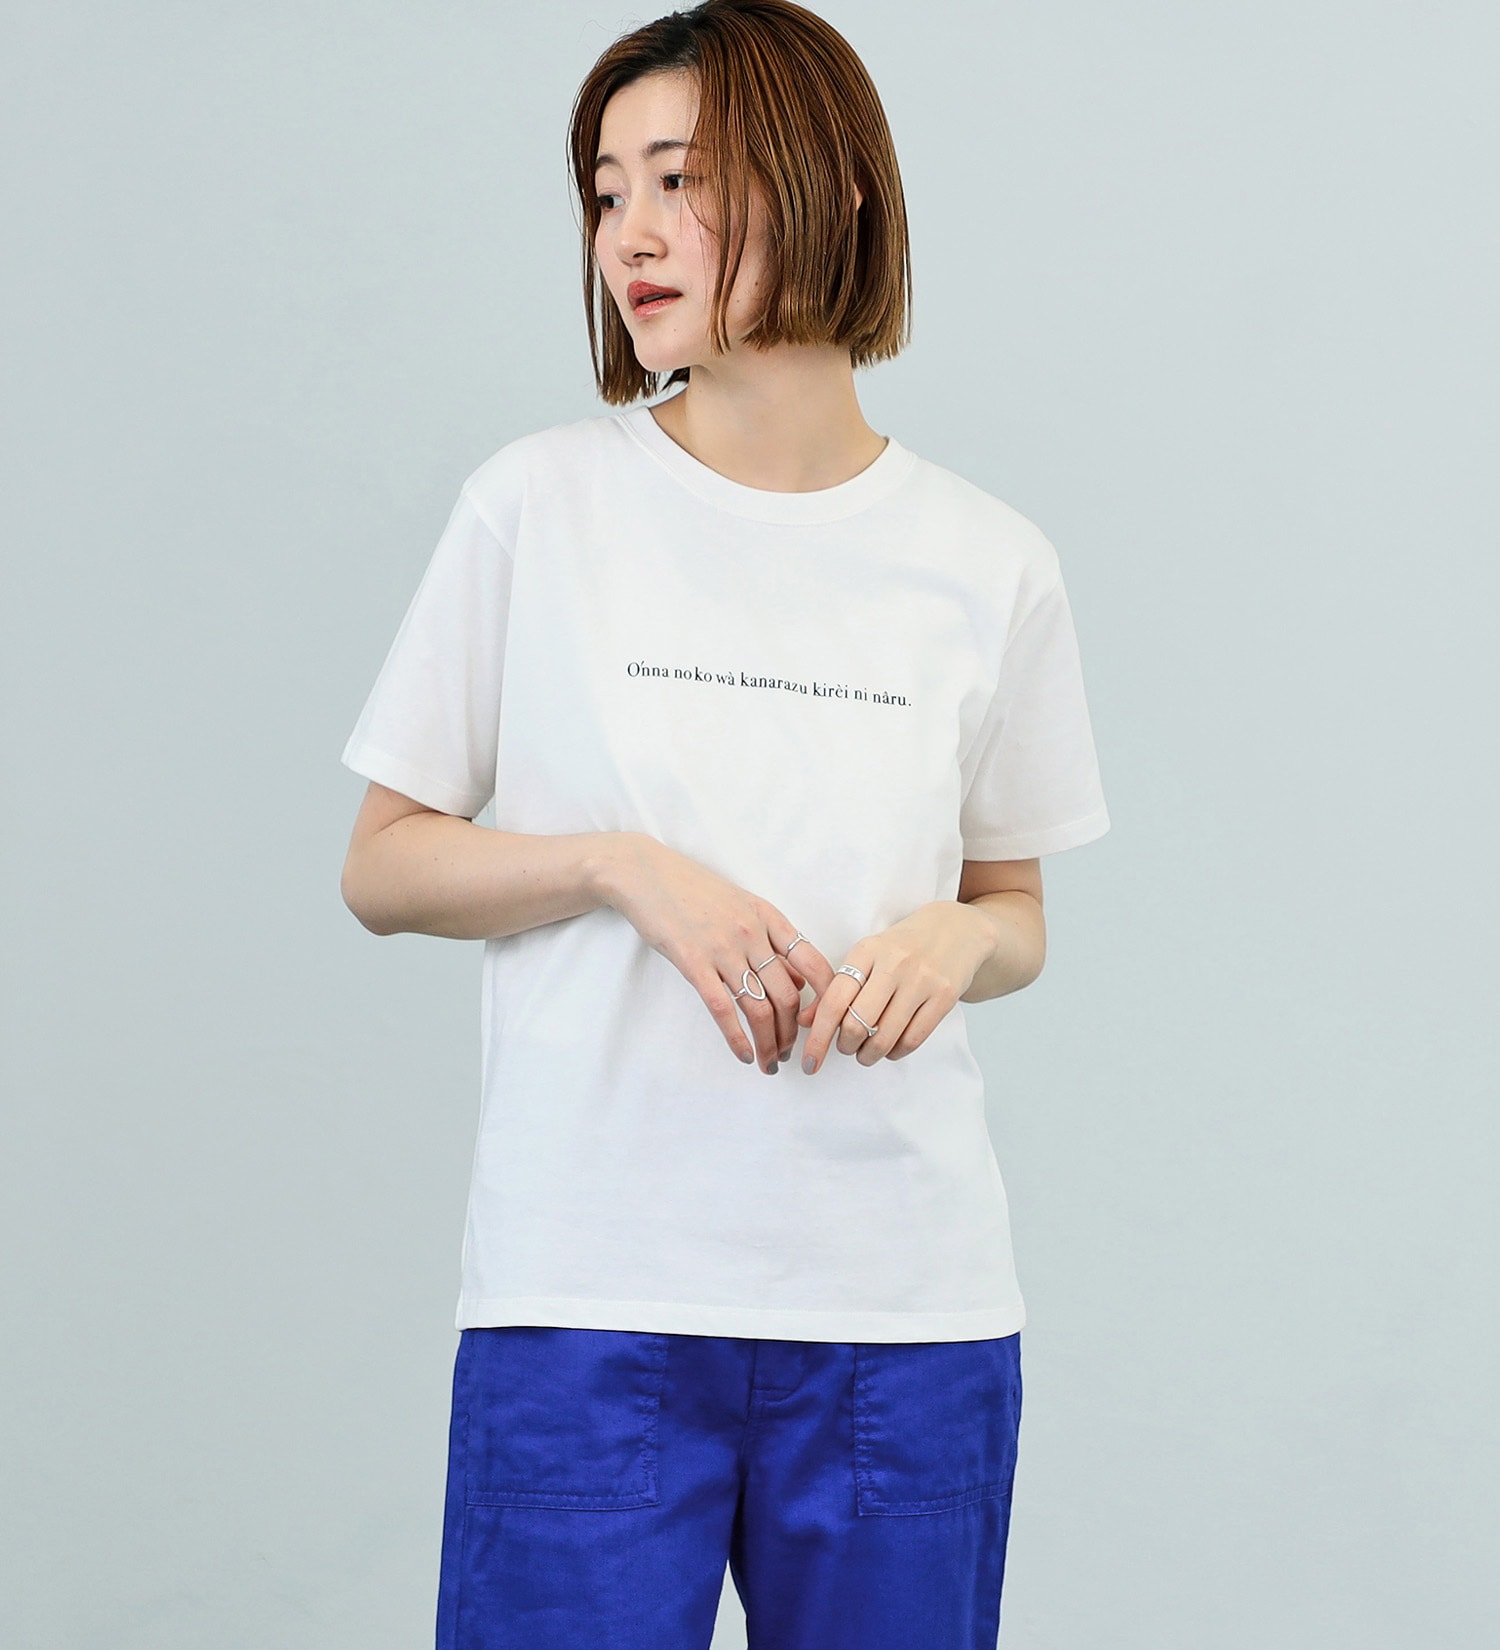 SOMETHING(サムシング)のSOMETHING コンセプトロゴ半袖Tシャツ|トップス/Tシャツ/カットソー/レディース|ホワイト